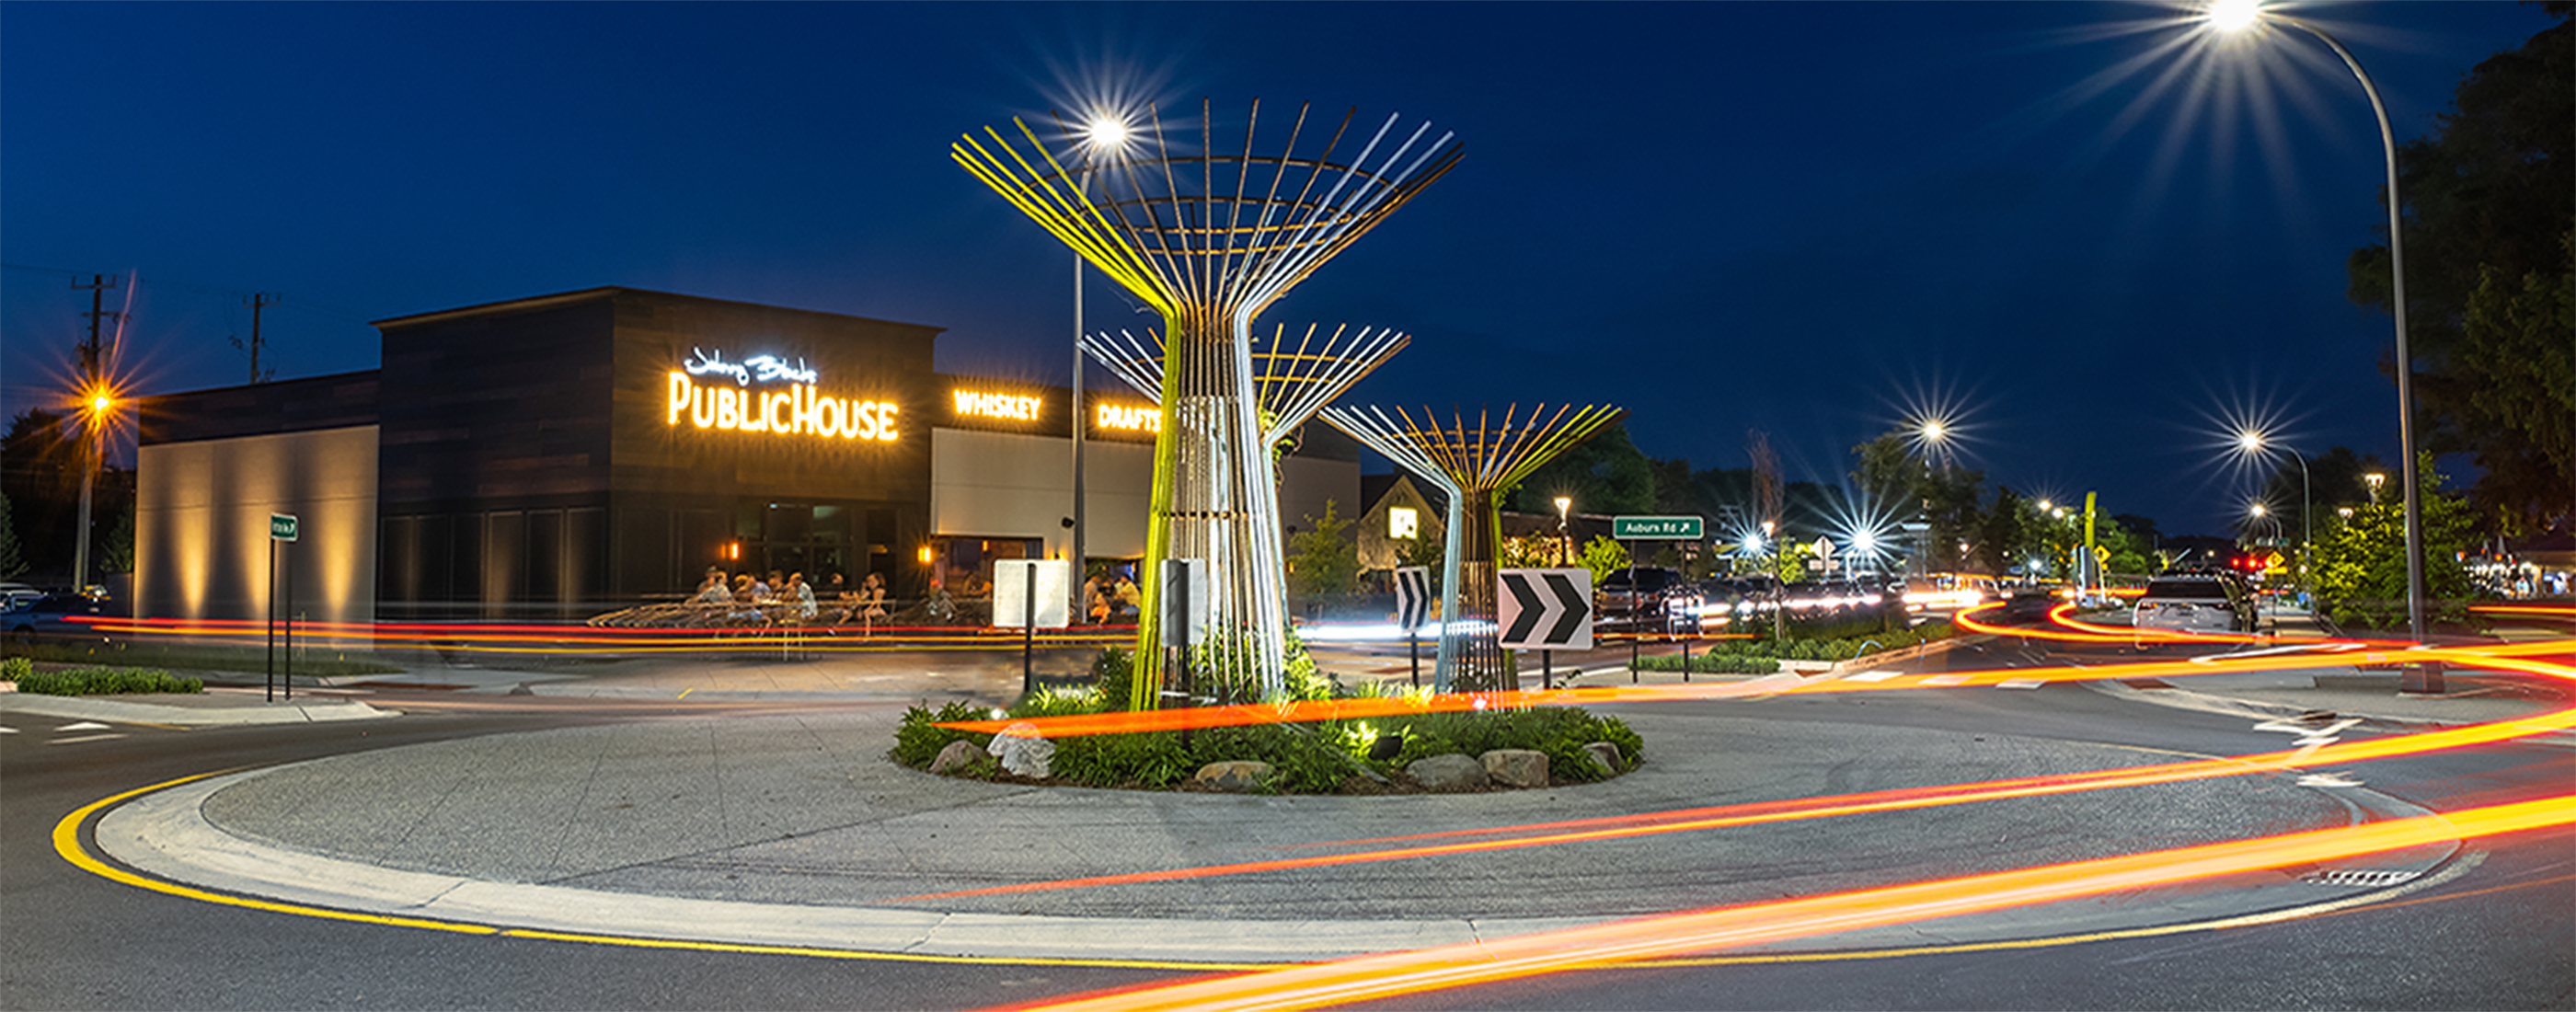 Auburn Road roundabout art feature at night